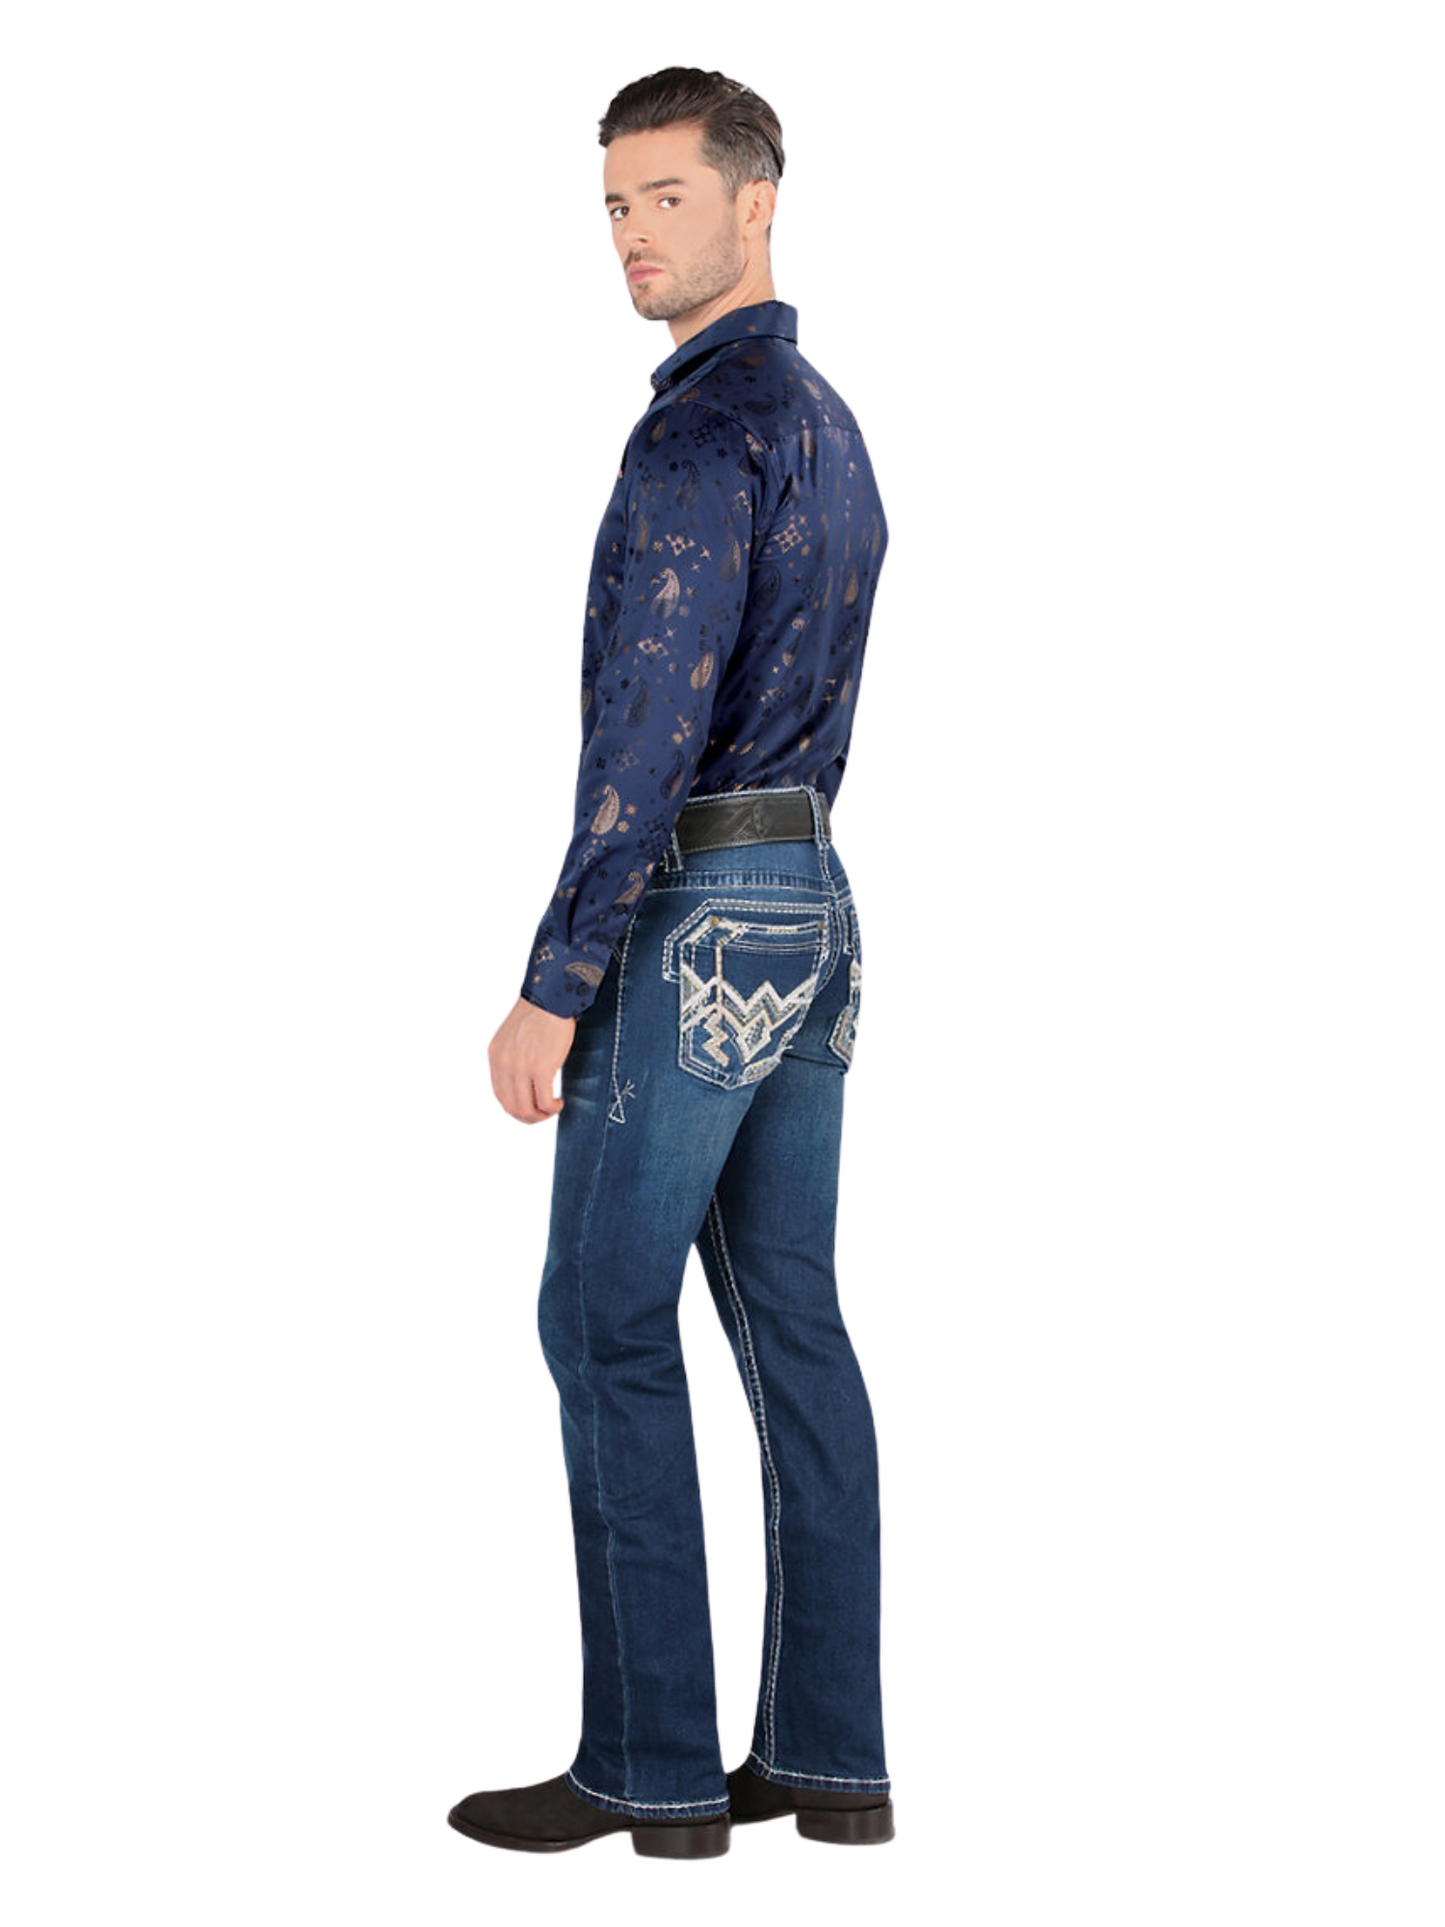 Stretch Denim Jeans for Men 'Montero' - ID: 4600 Denim Jeans Montero